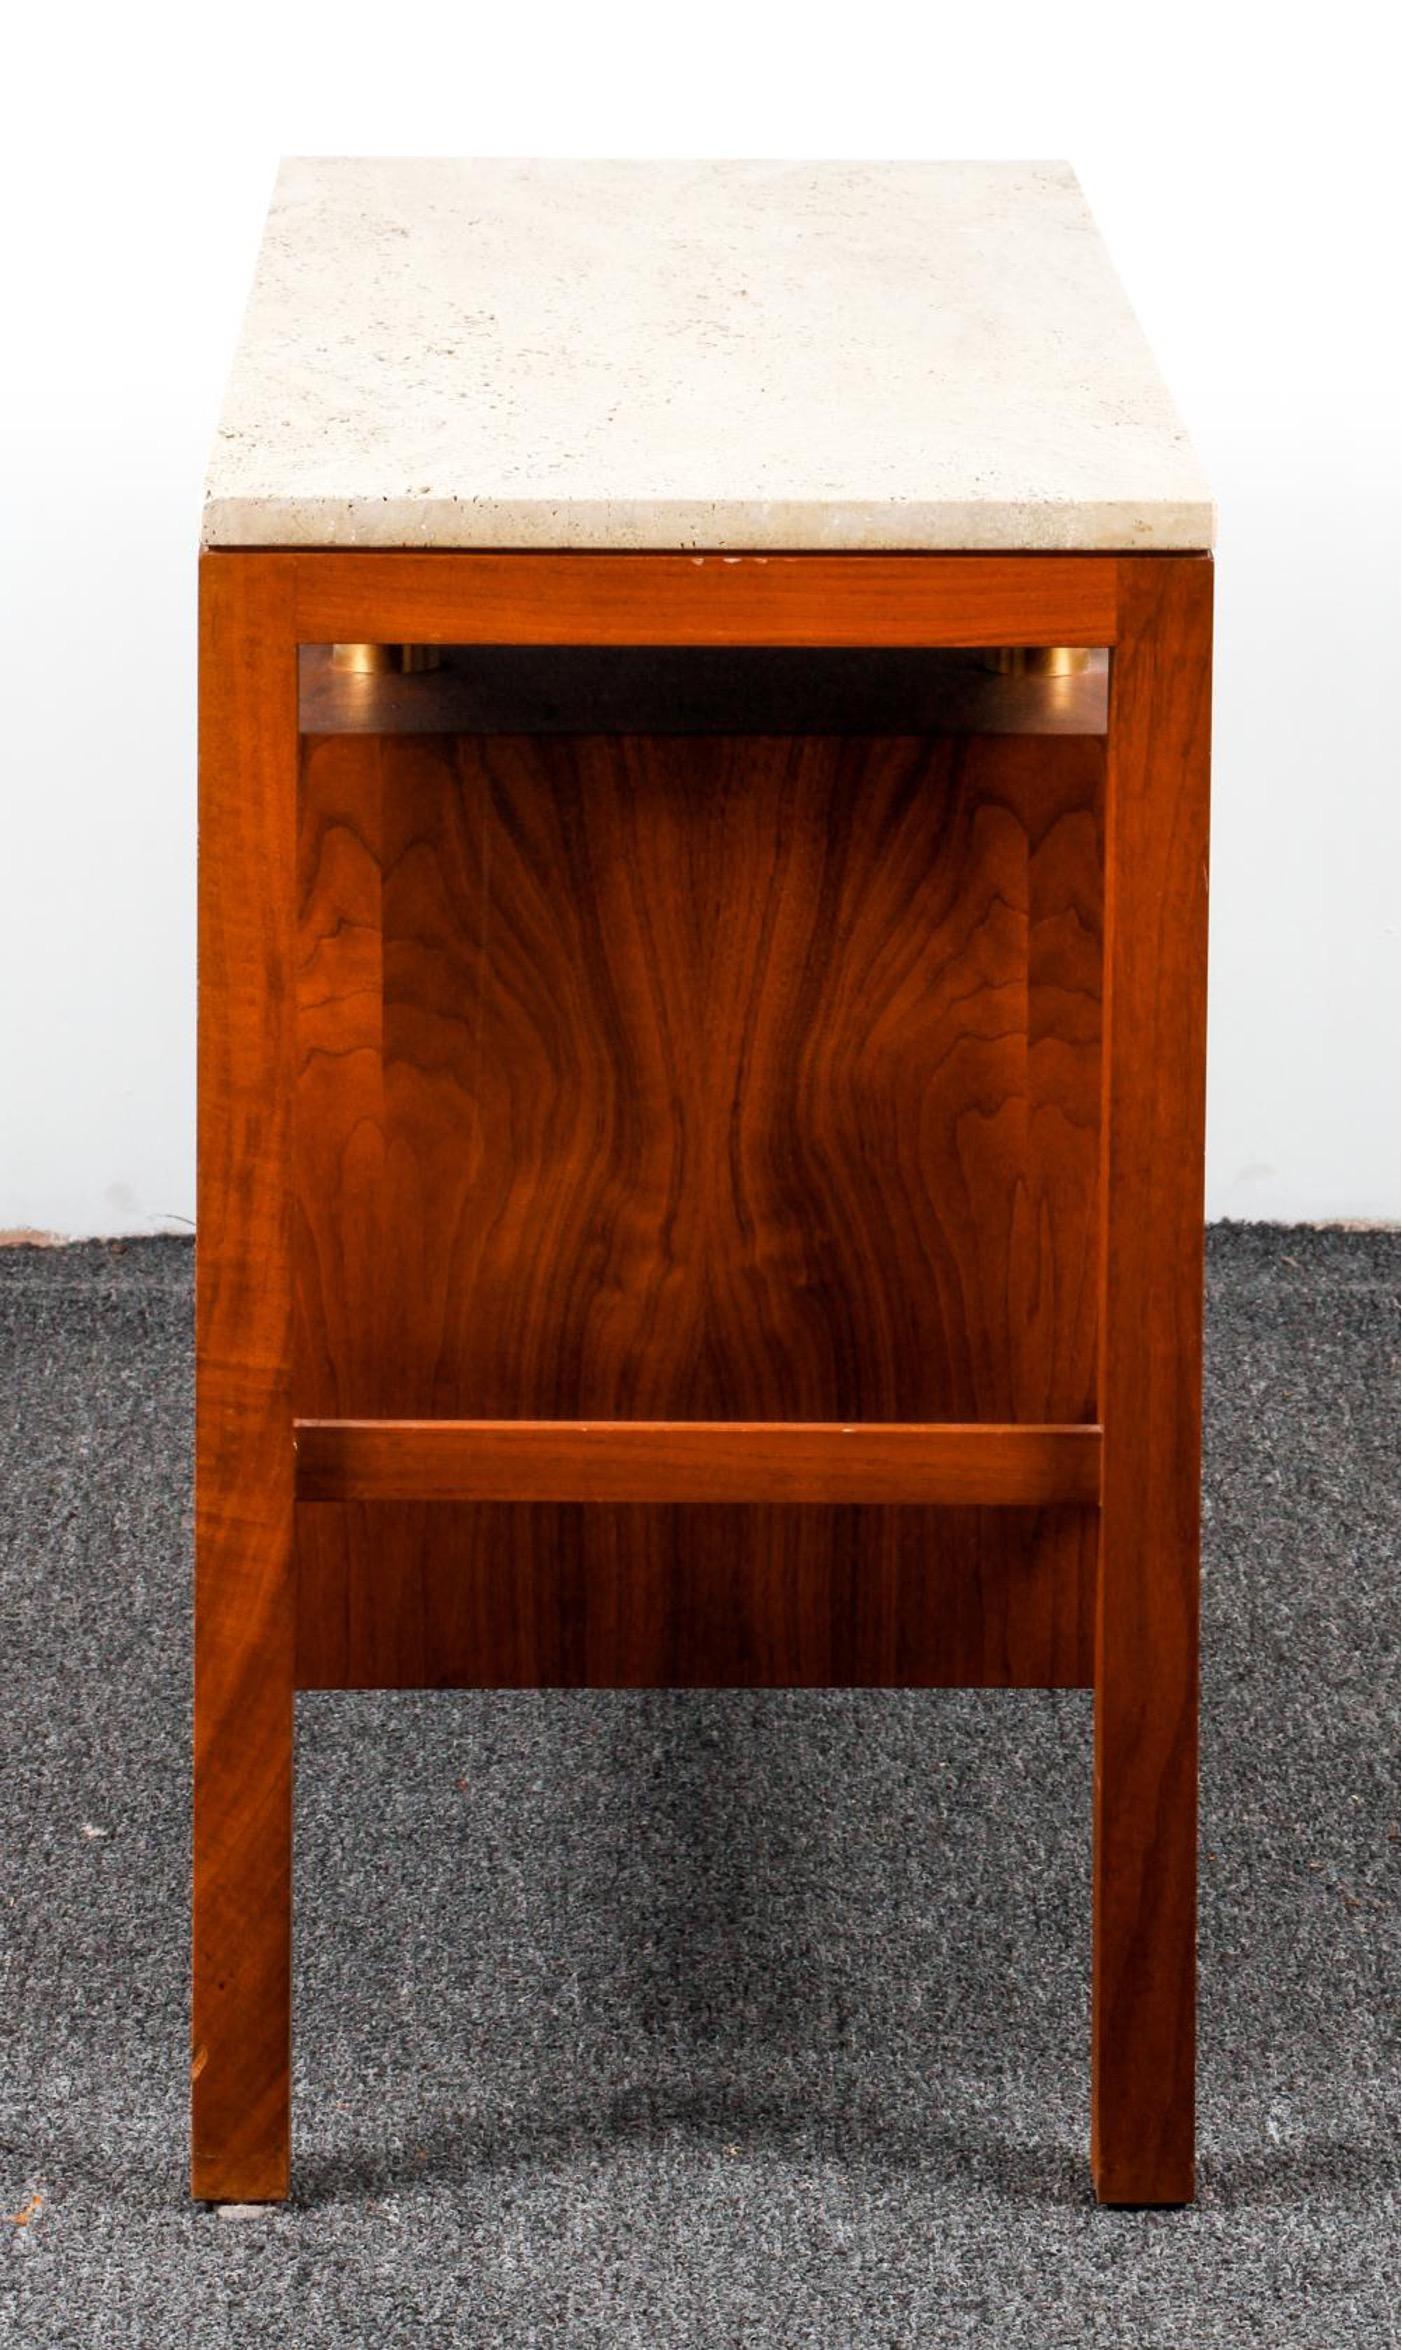 Vladimir Kagan, 1961 Mid-Century Modern Sideboards / Cabinets Original Receipts For Sale 5